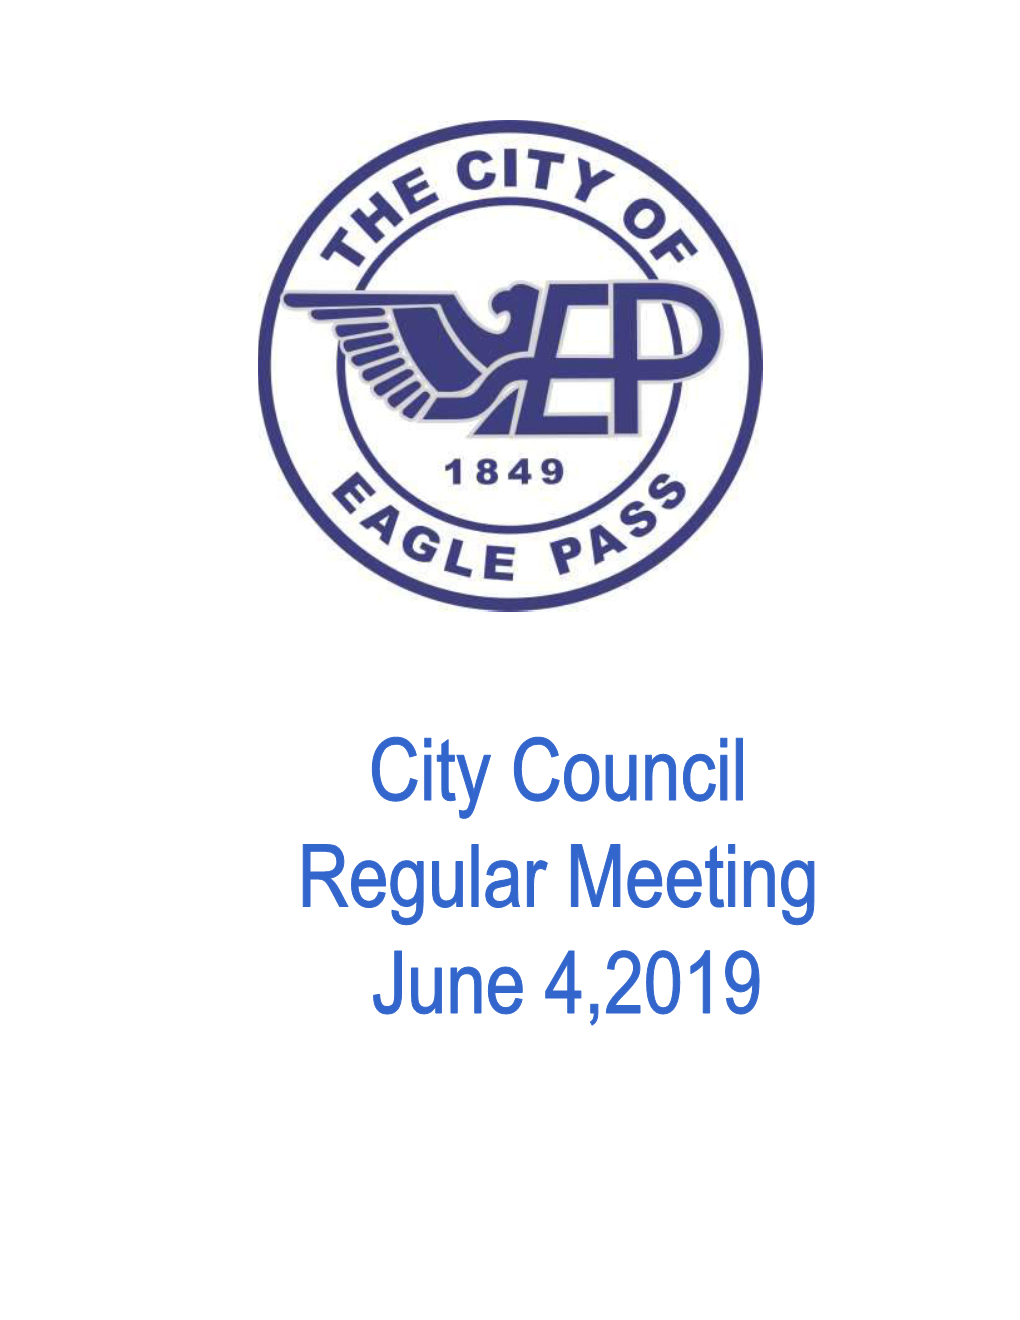 City Council Regular Meeting June 4, 2019